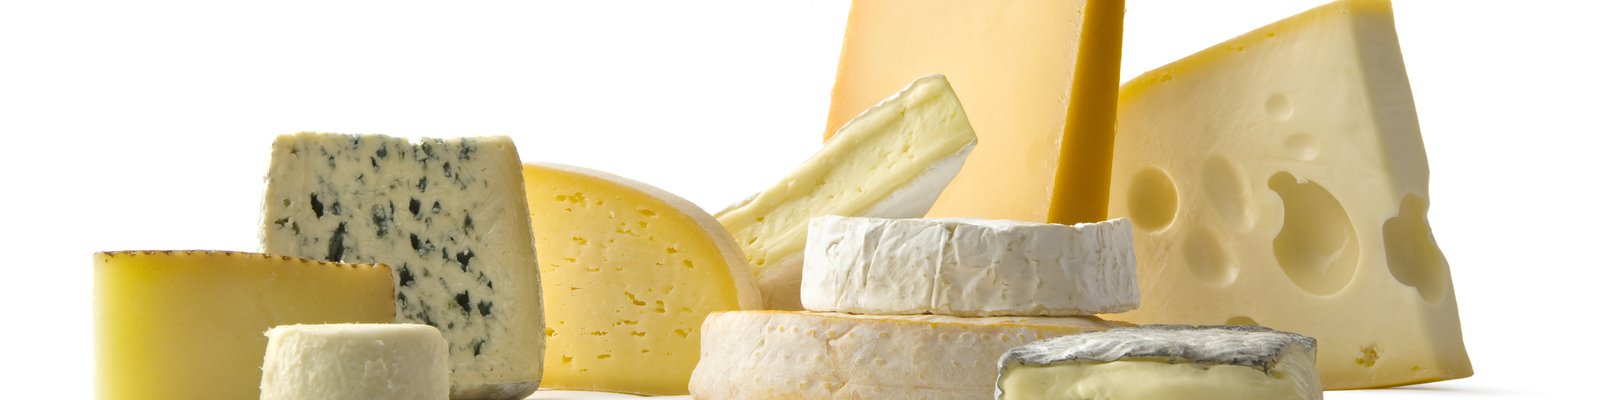 Cheese tasting